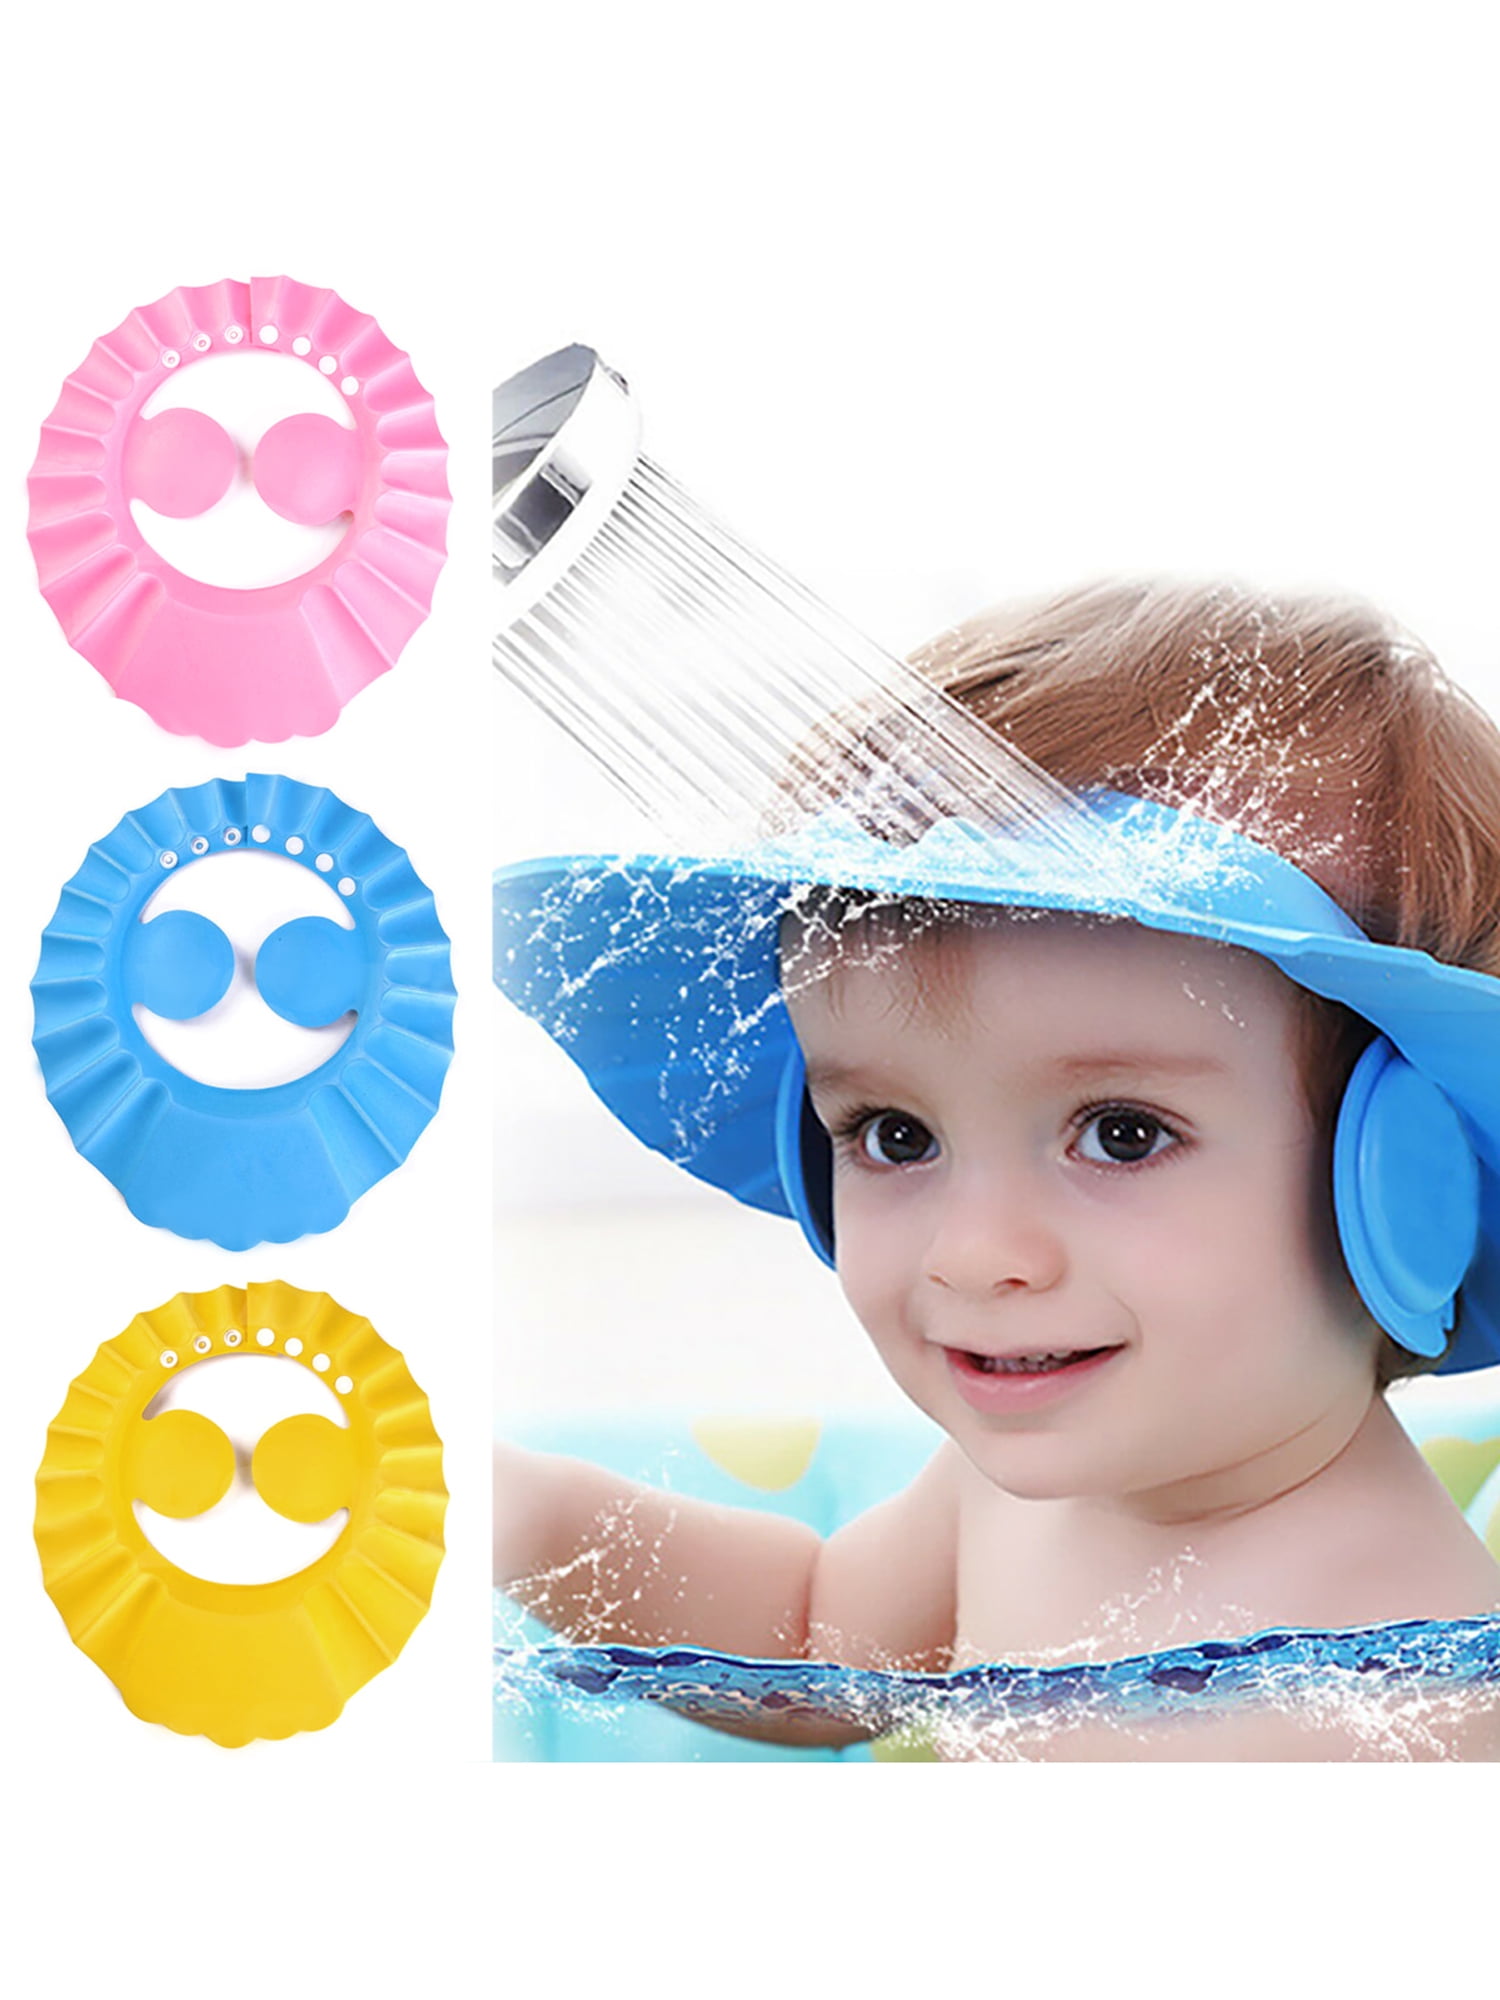 2*Waterproof Safe Soft Kids Child Shampoo Bath Shower Cap Hat Wash Hair Shield 